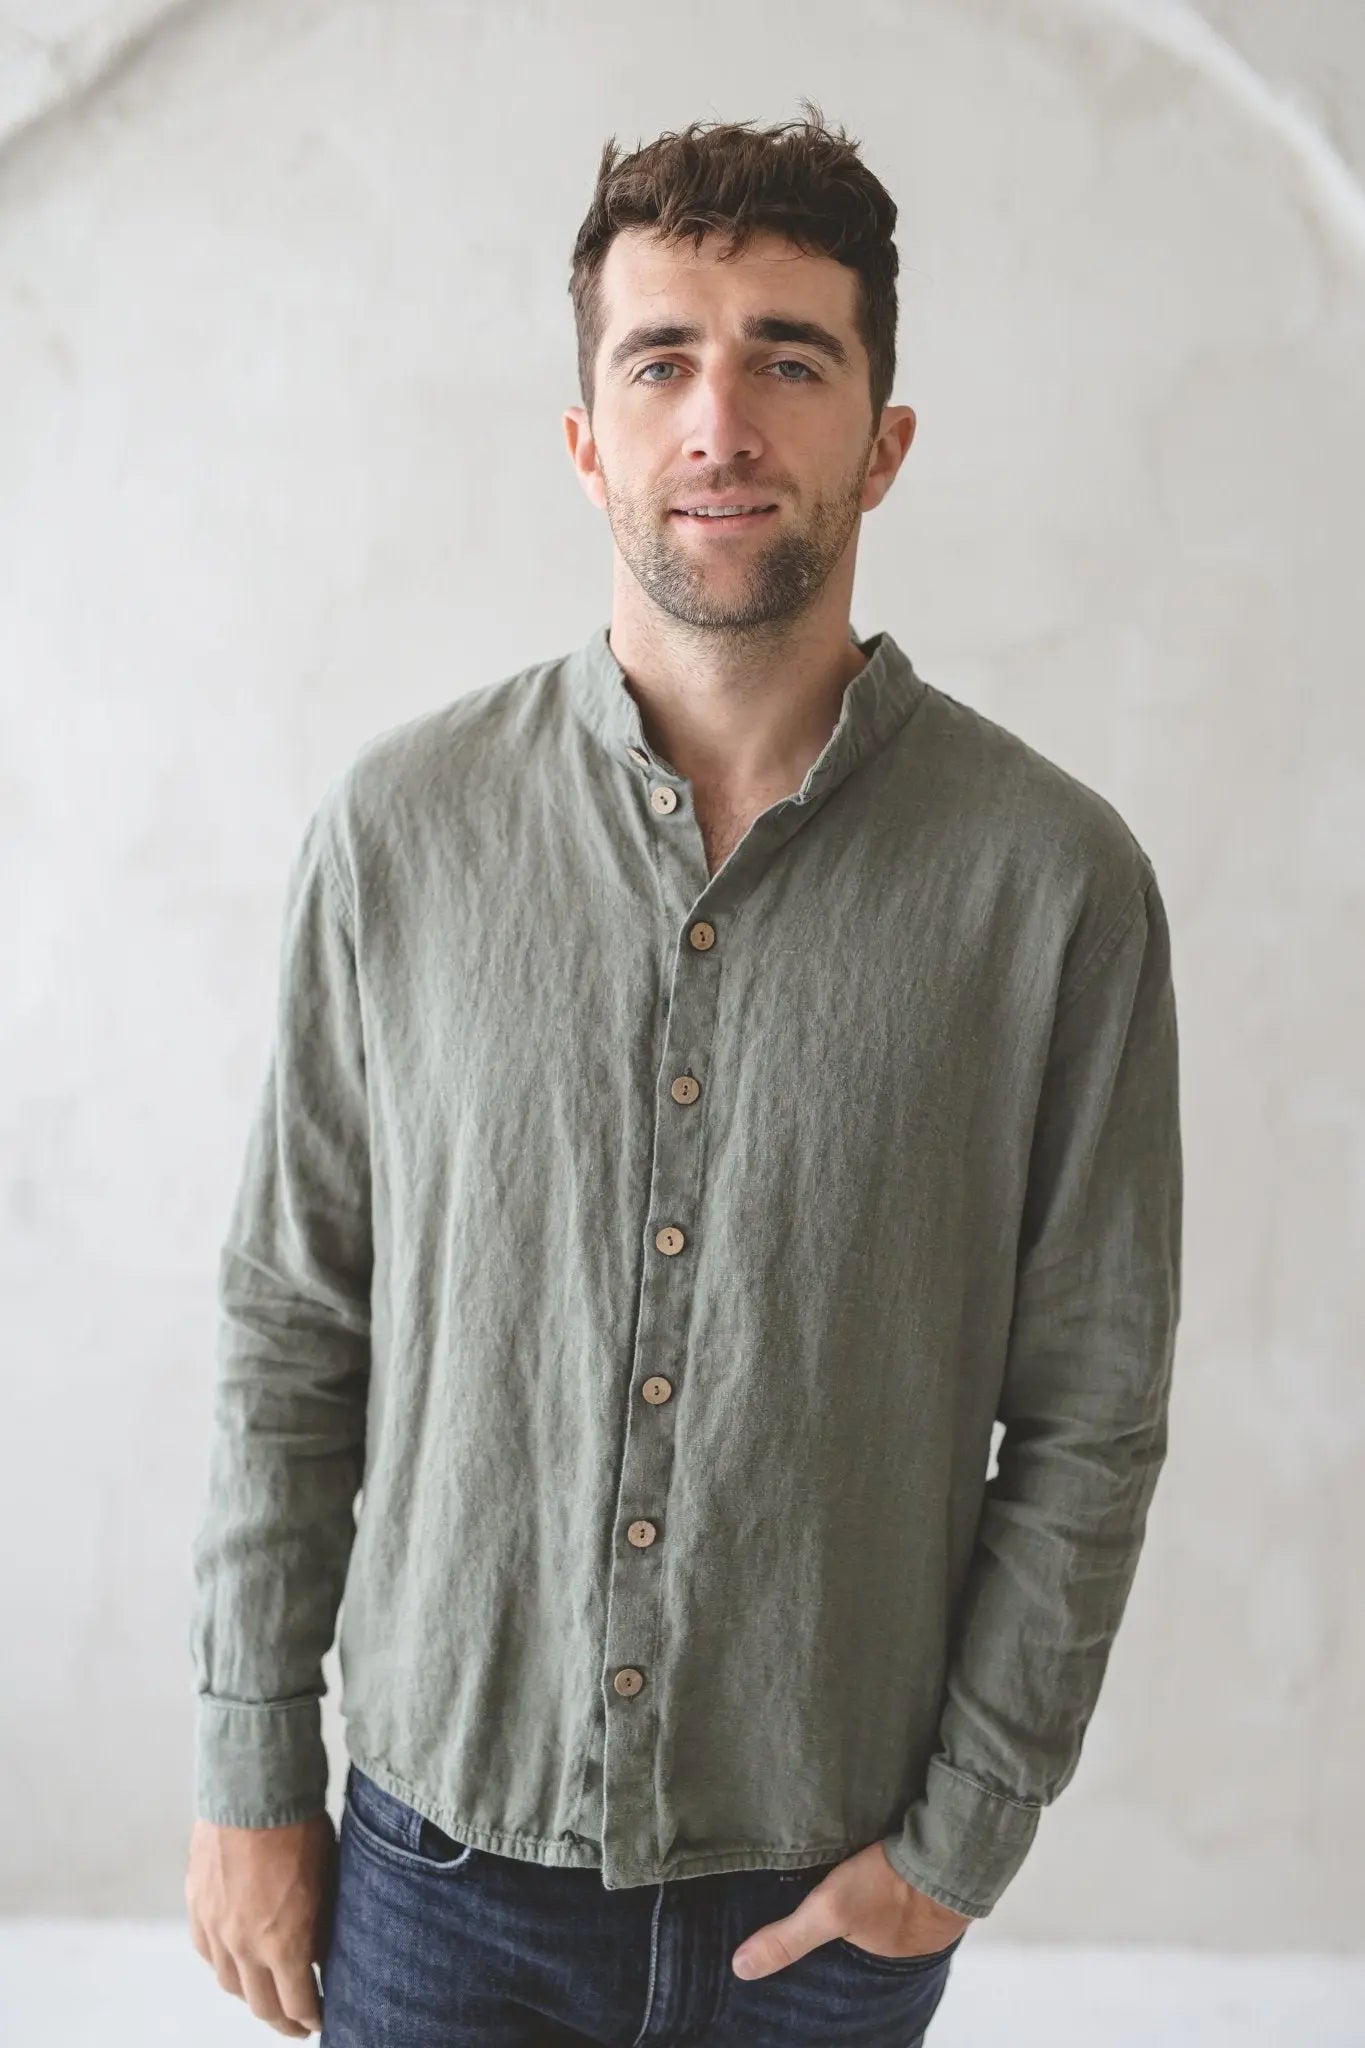 Oxford Linen Men's Shirt - Epic Linen luxury linen